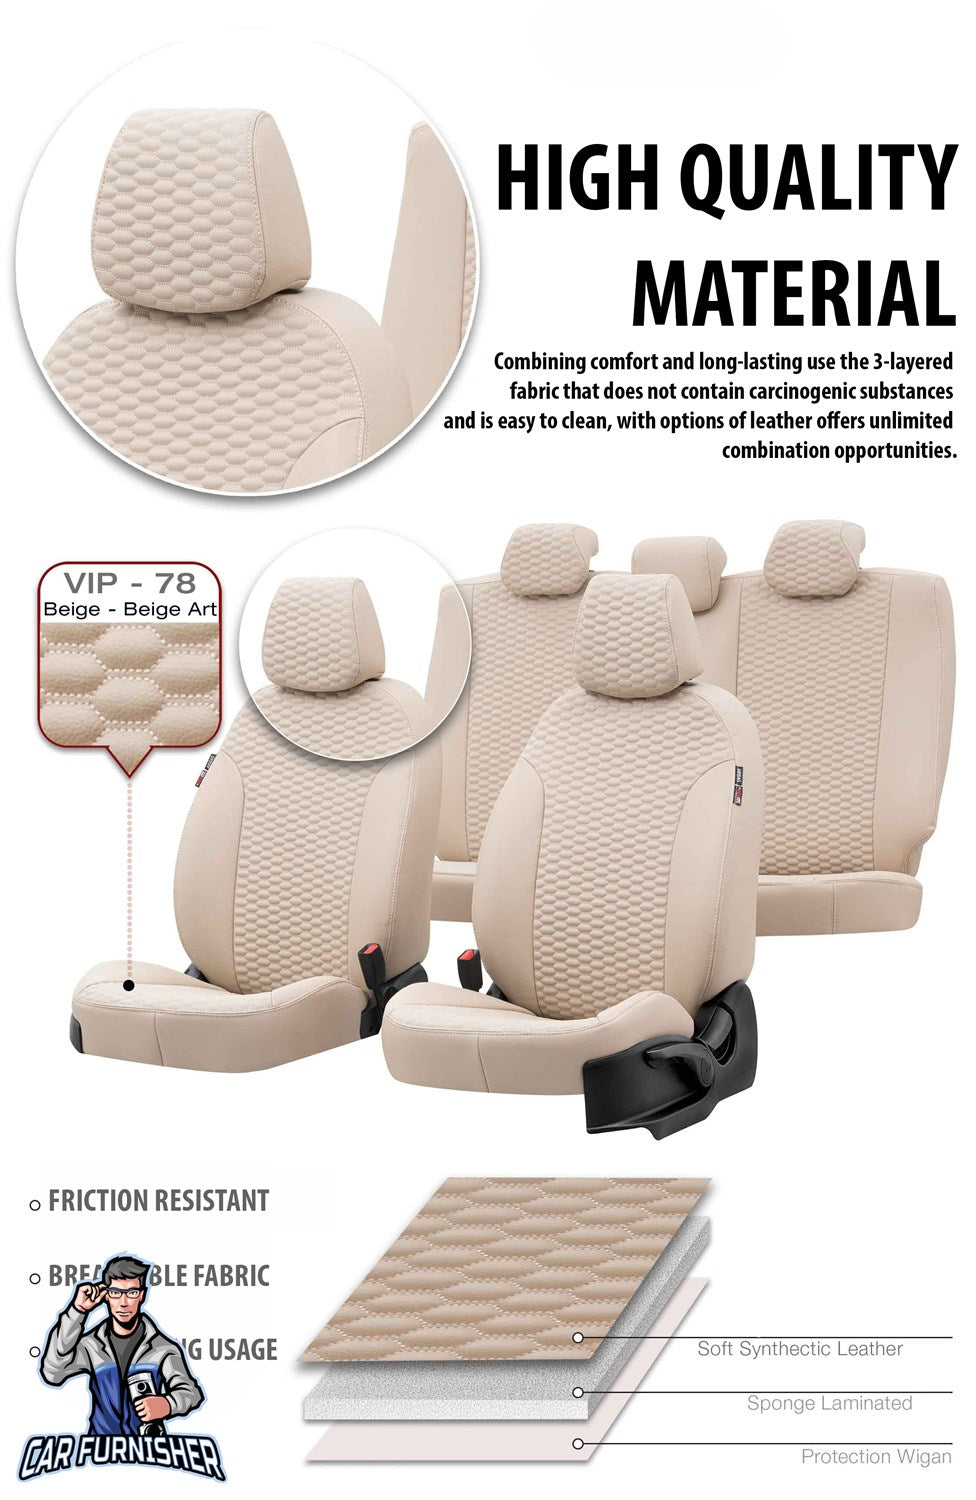 Isuzu NPR Seat Covers Tokyo Leather Design Ivory Leather